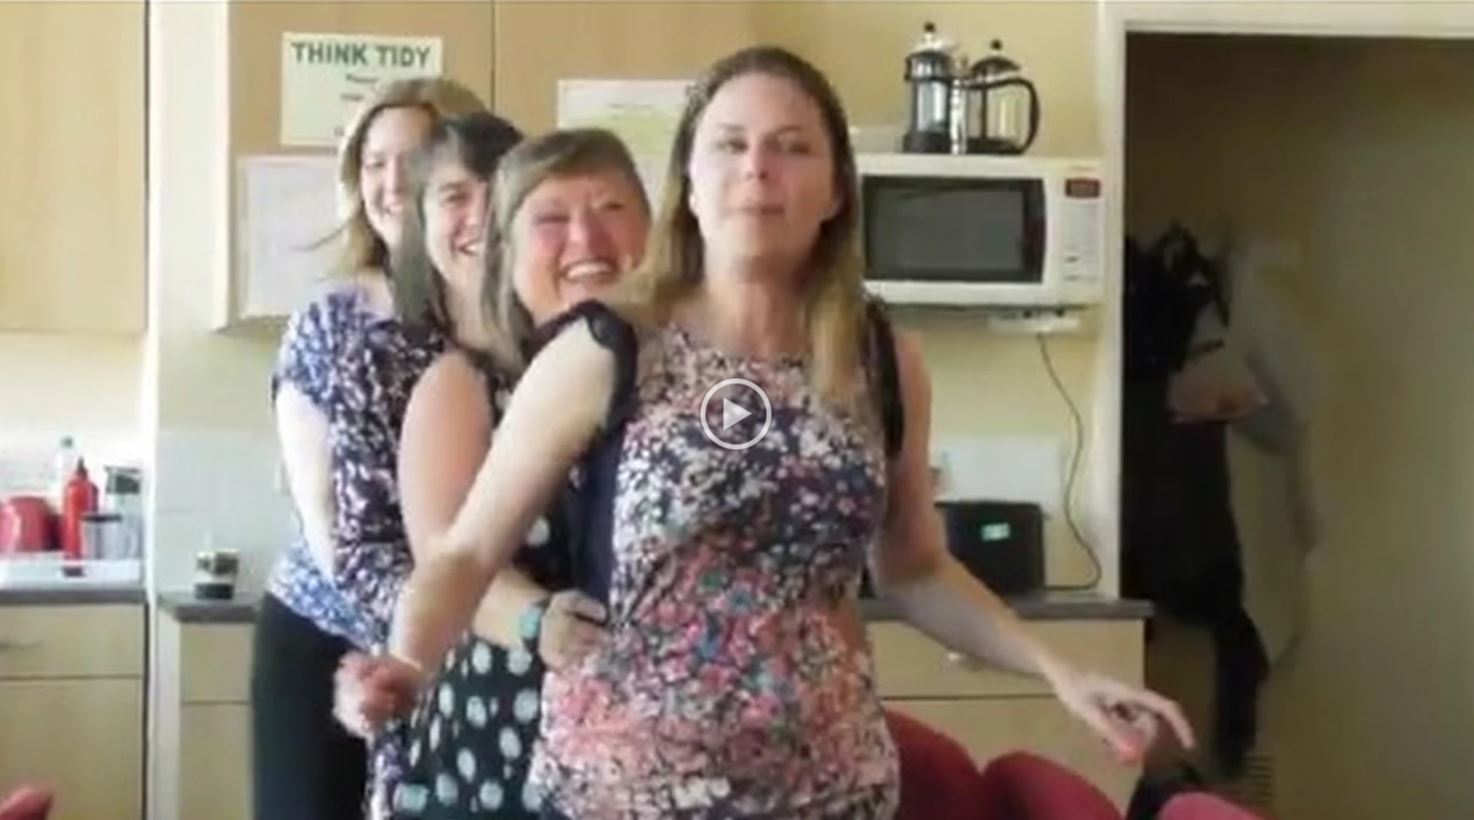 Shake it off - staff video